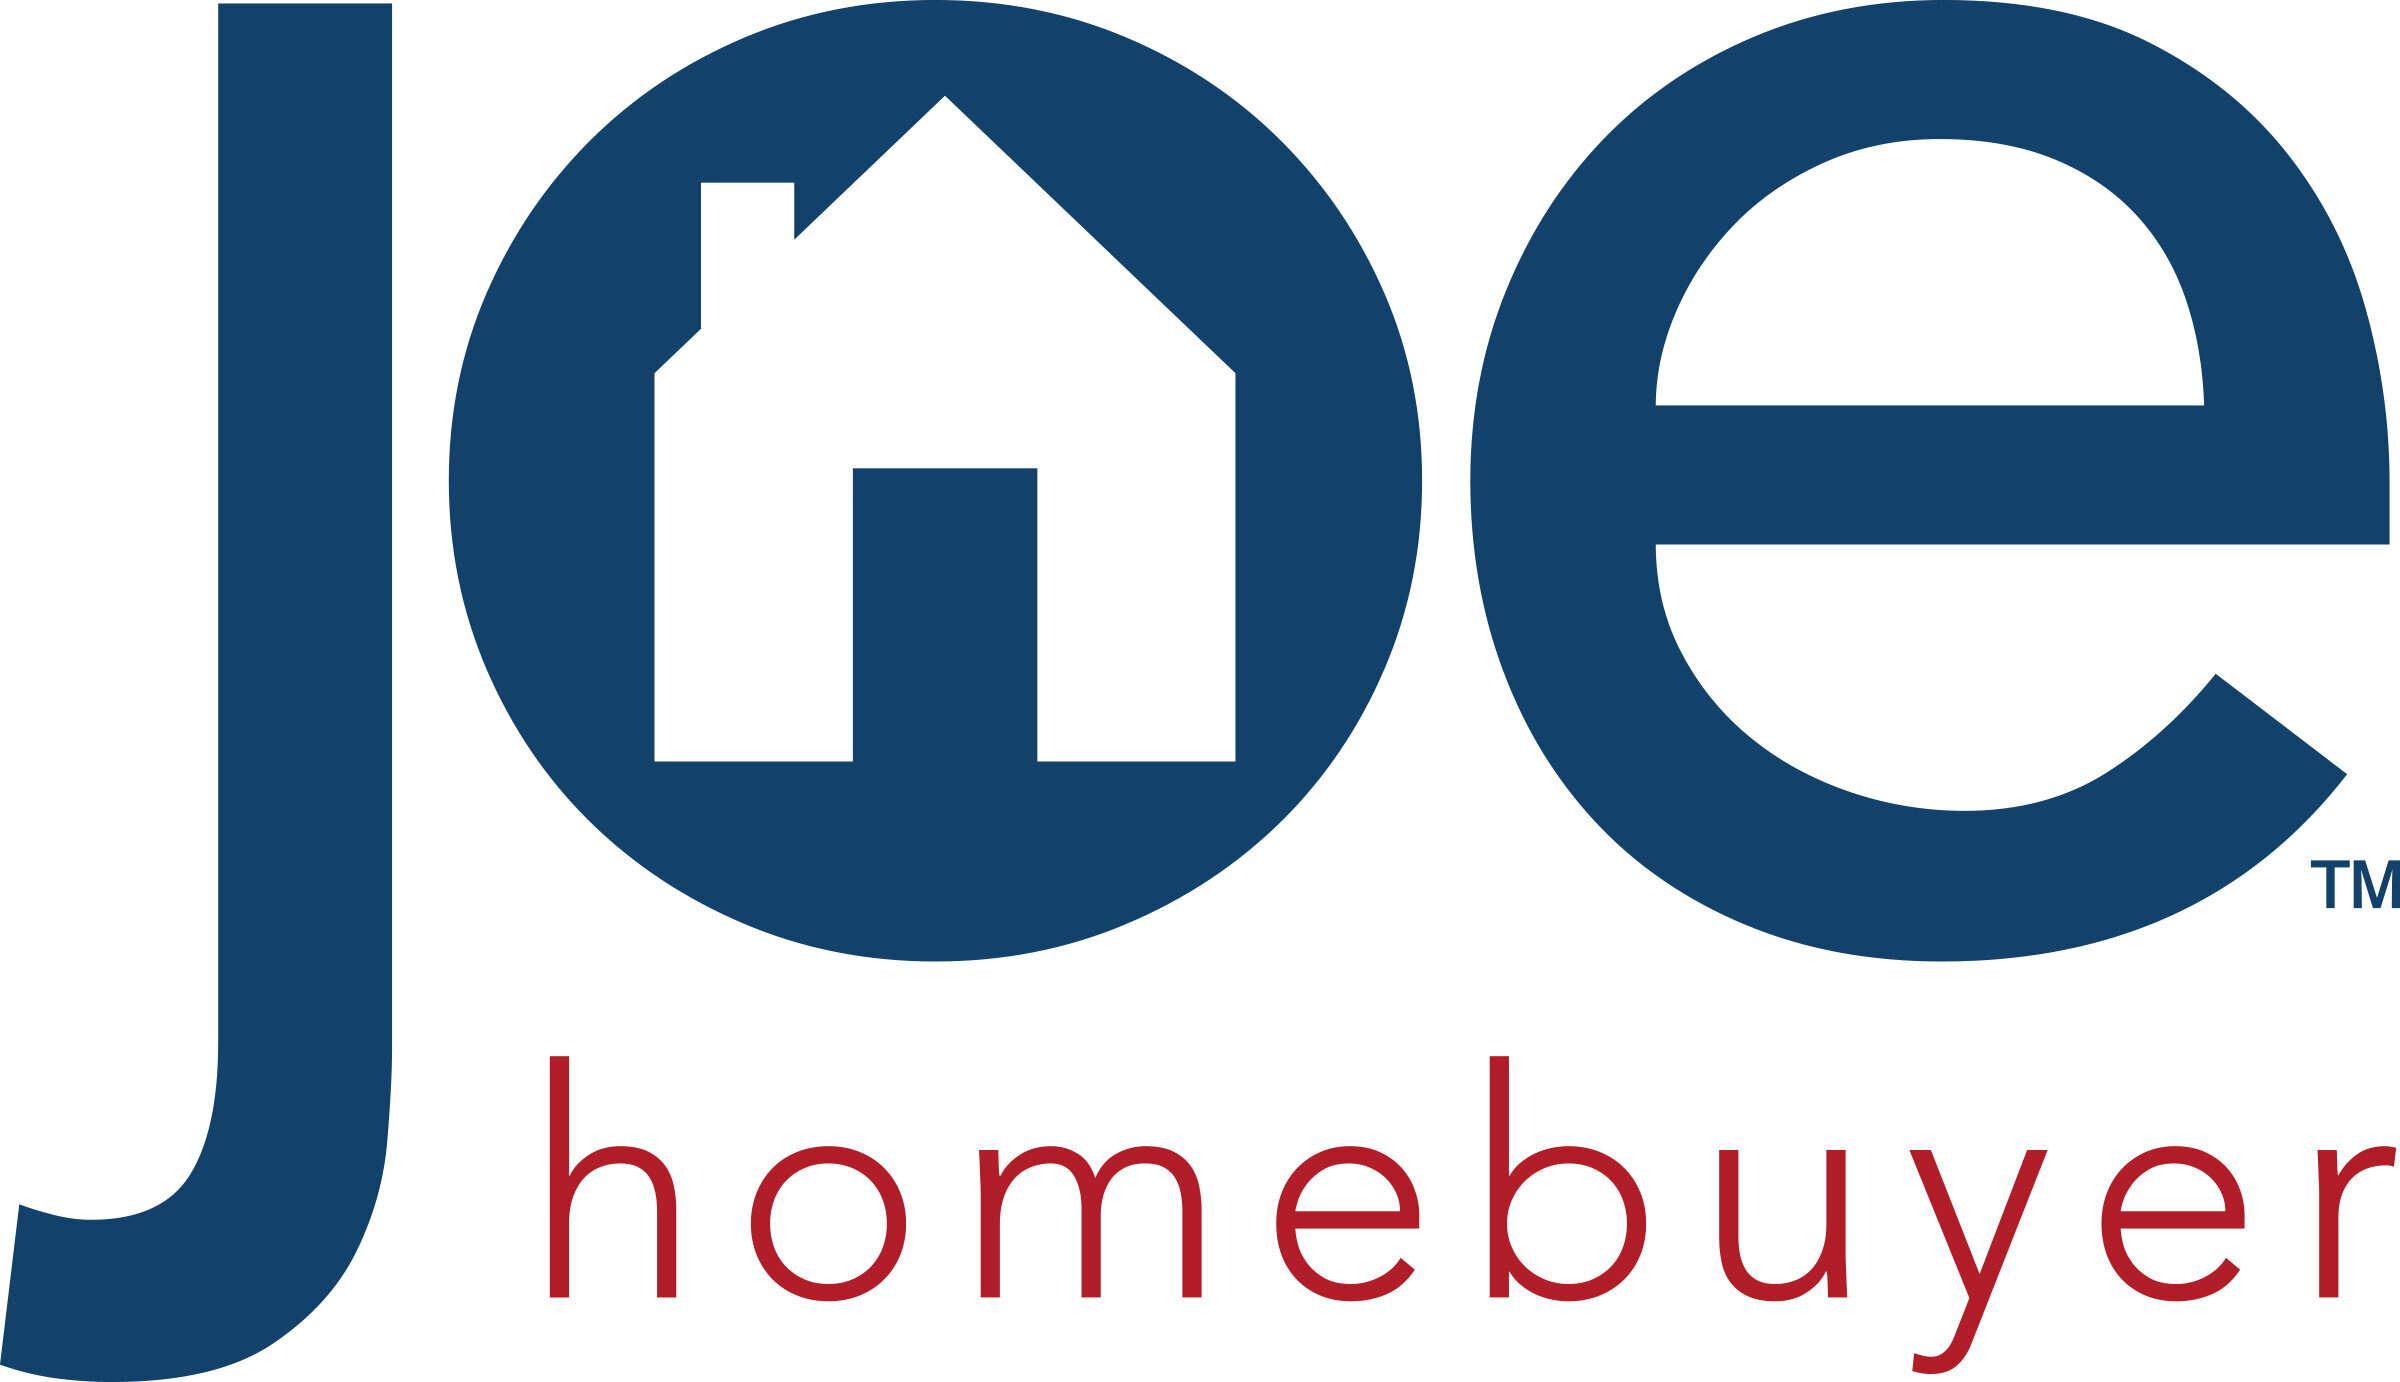 Joe Homebuyer West Michigan logo